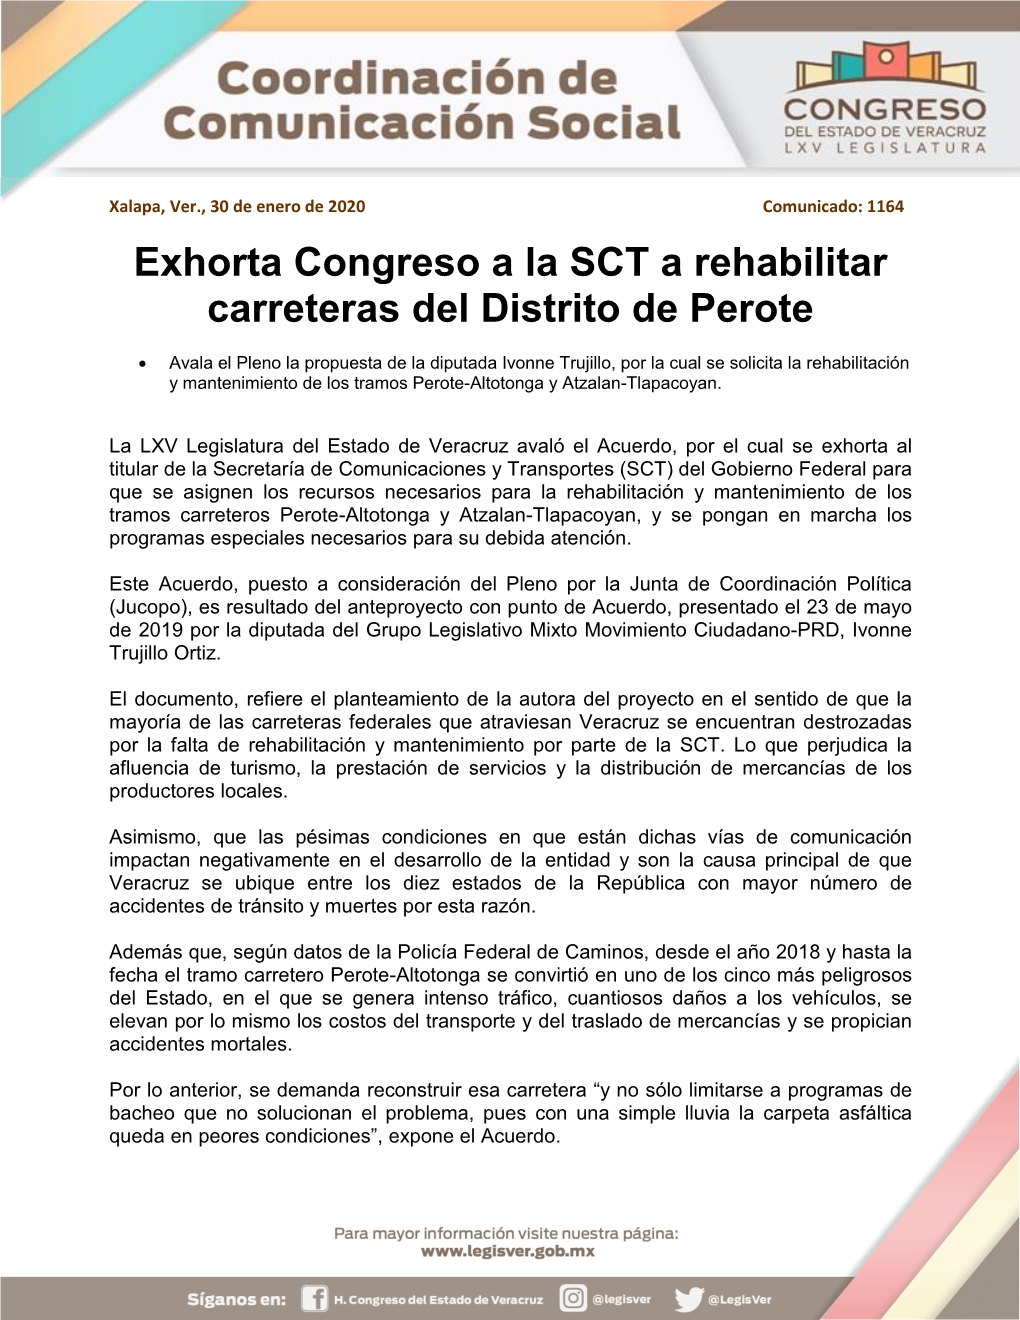 Exhorta Congreso a La SCT a Rehabilitar Carreteras Del Distrito De Perote